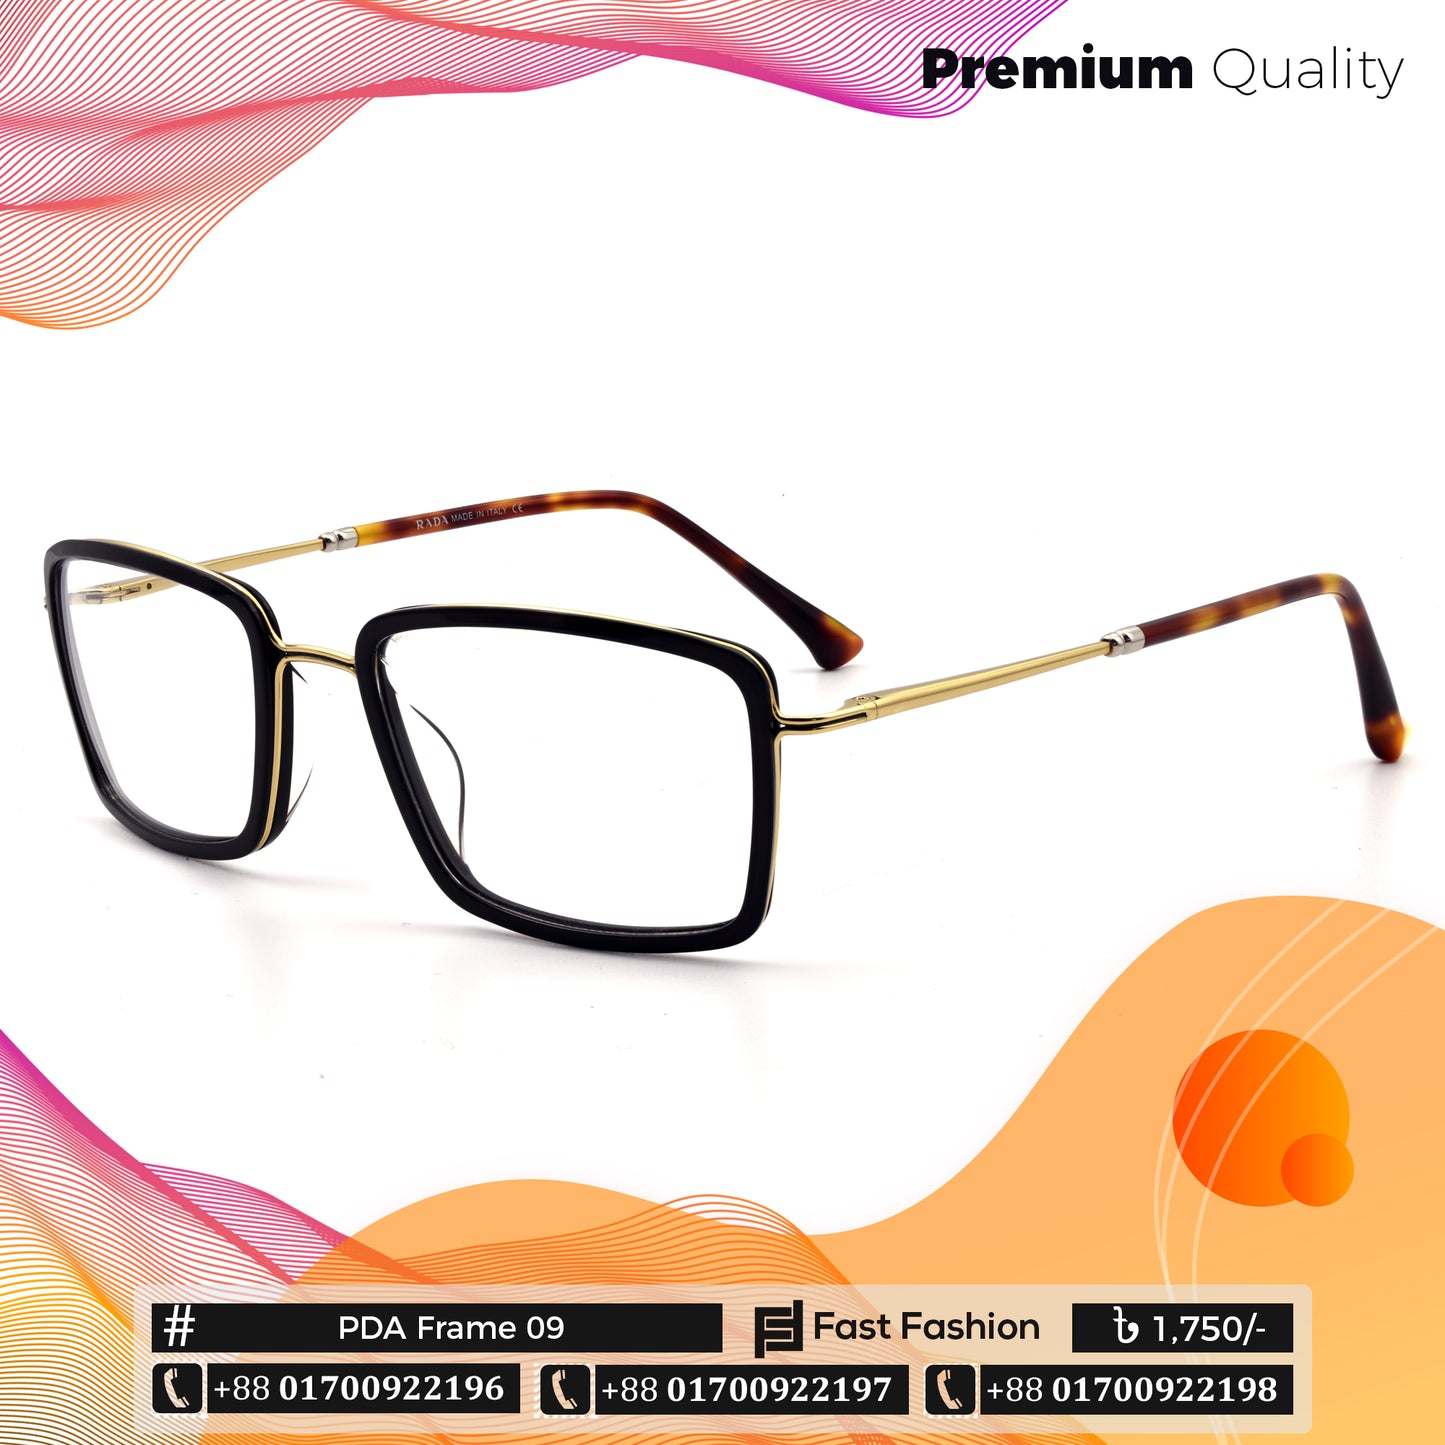 Trendy Stylish Optic Frame | PDA Frame 09 | Premium Quality